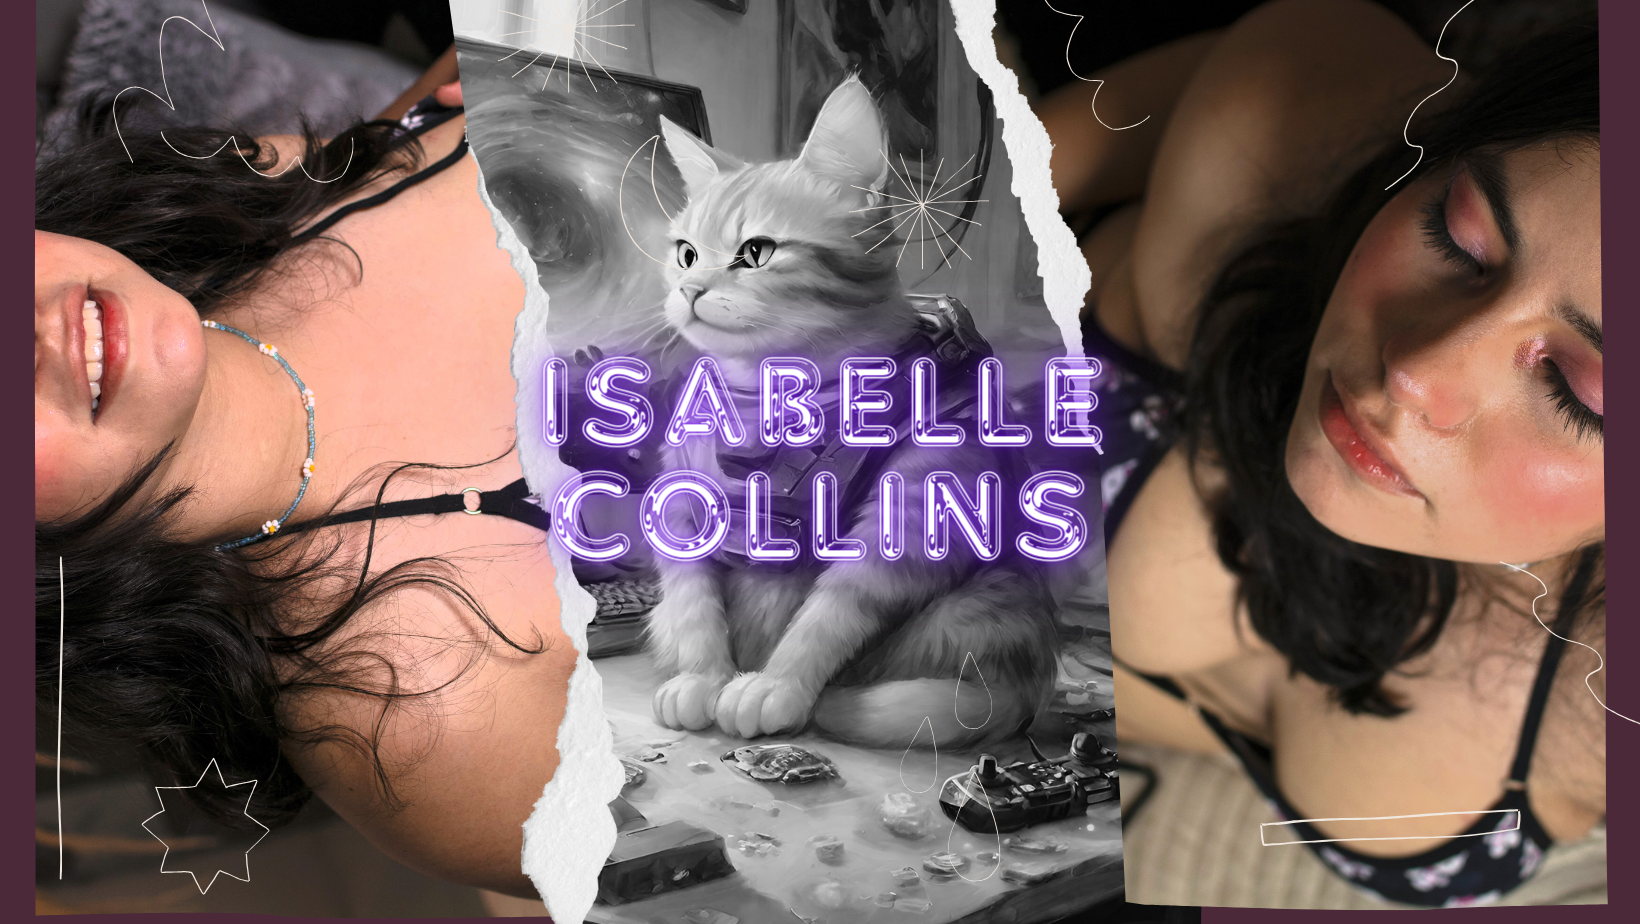 IsabelleCollins Isabelle Collins image: 1